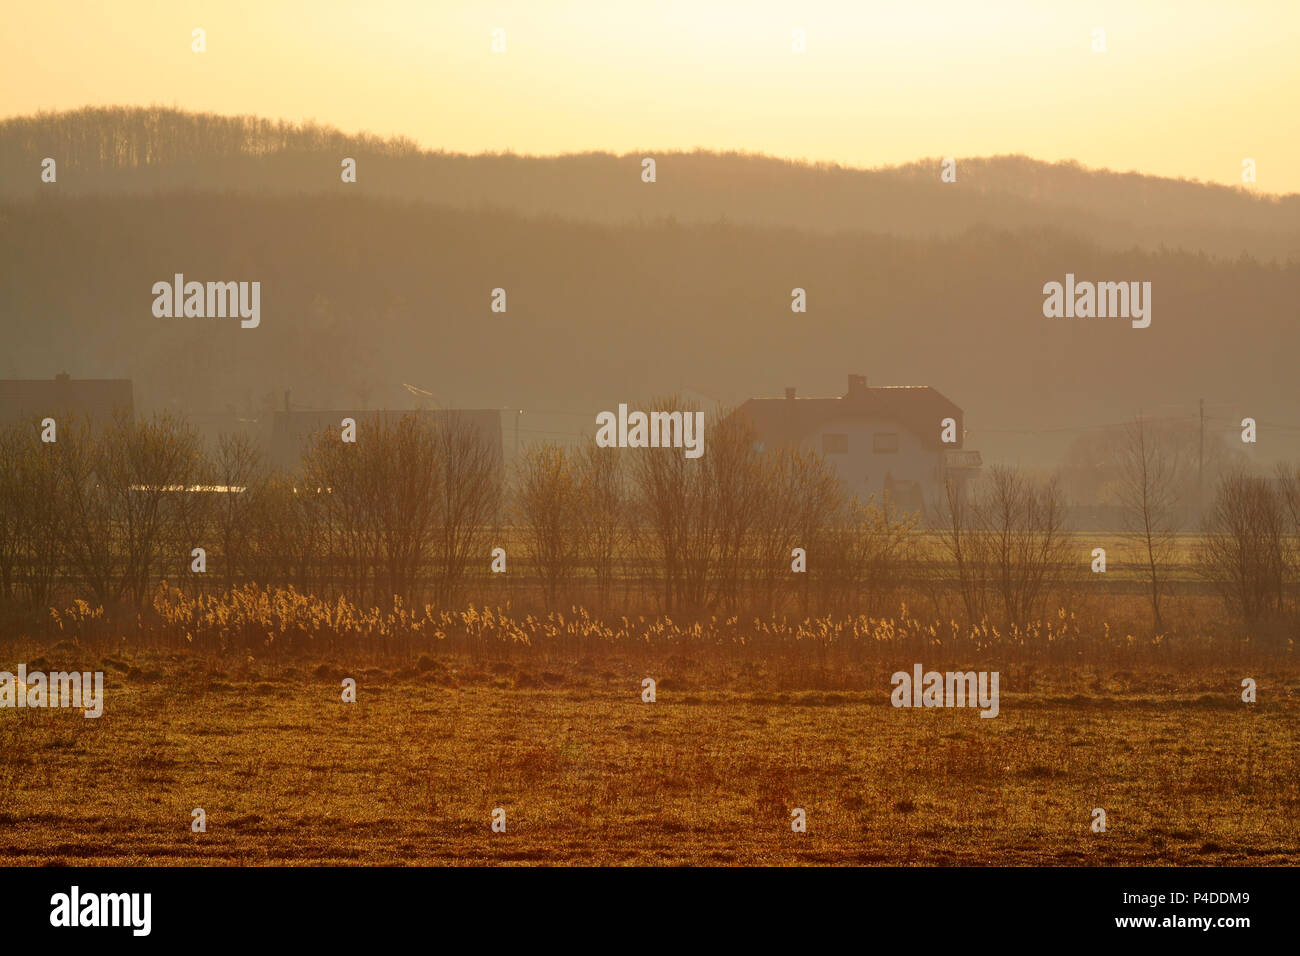 Warm hazy sunrise over village. Poland, The Holy Cross Mountains. Stock Photo